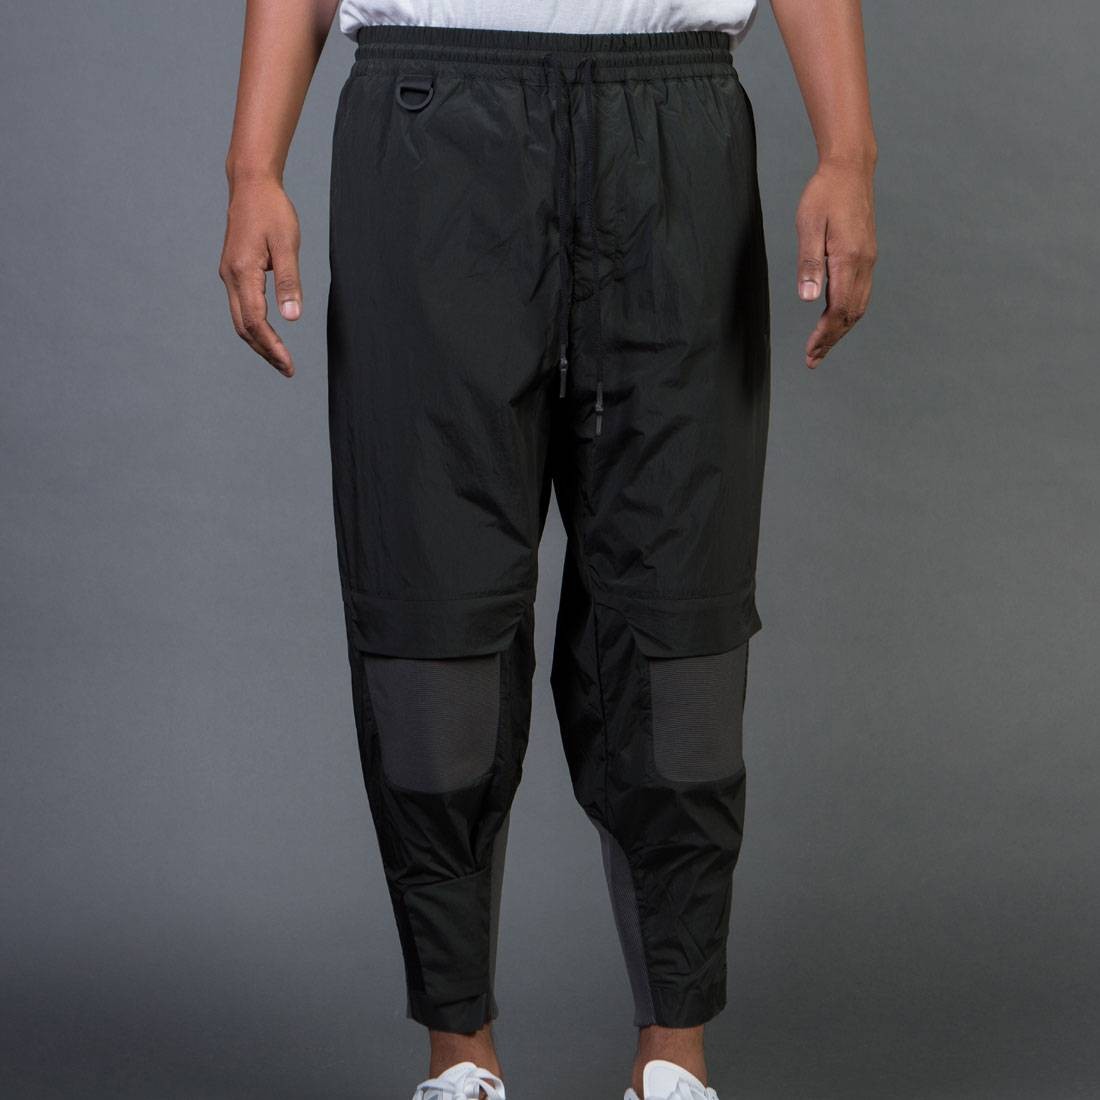 Adidas Y-3 Men Nylon Rib Pants olive dark black olive